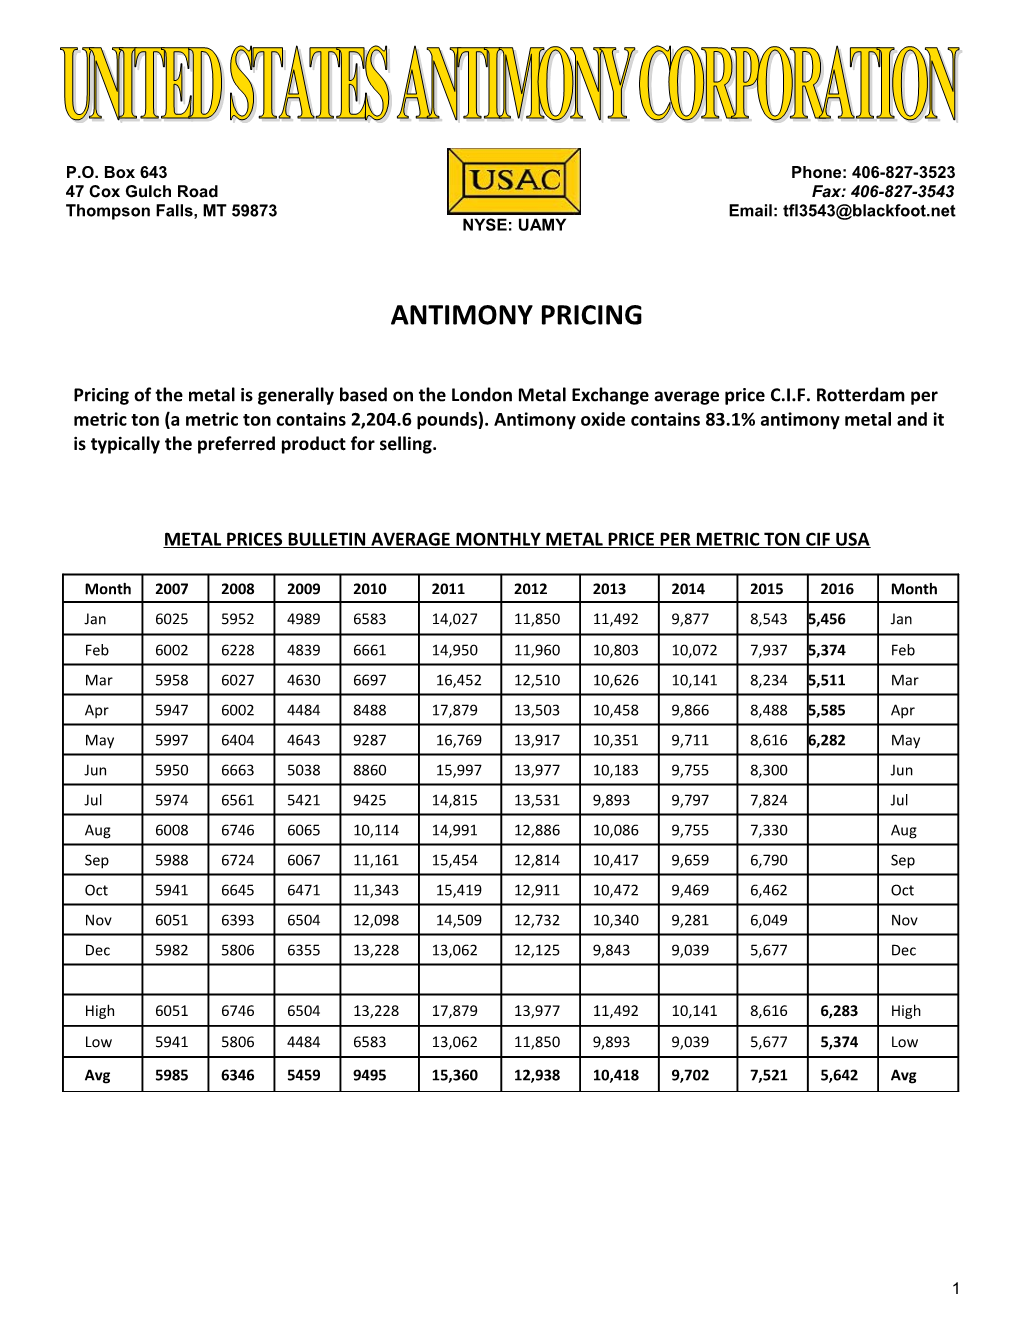 Antimony Pricing